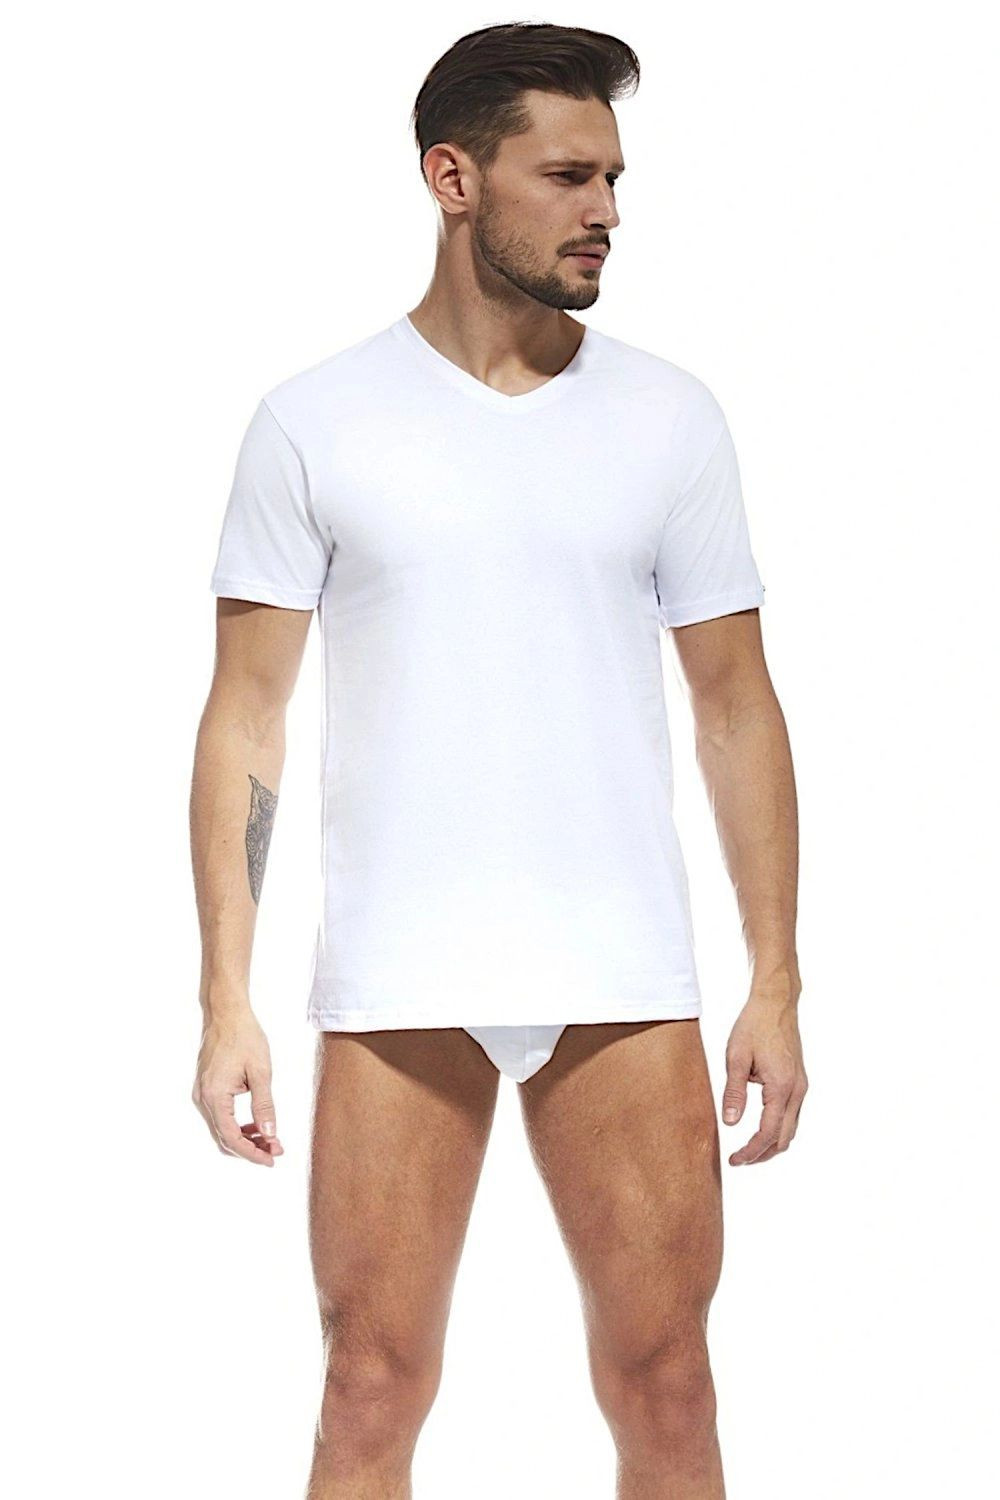 Pánské tričko 201 Authentic new biała - CORNETTE Bílá L